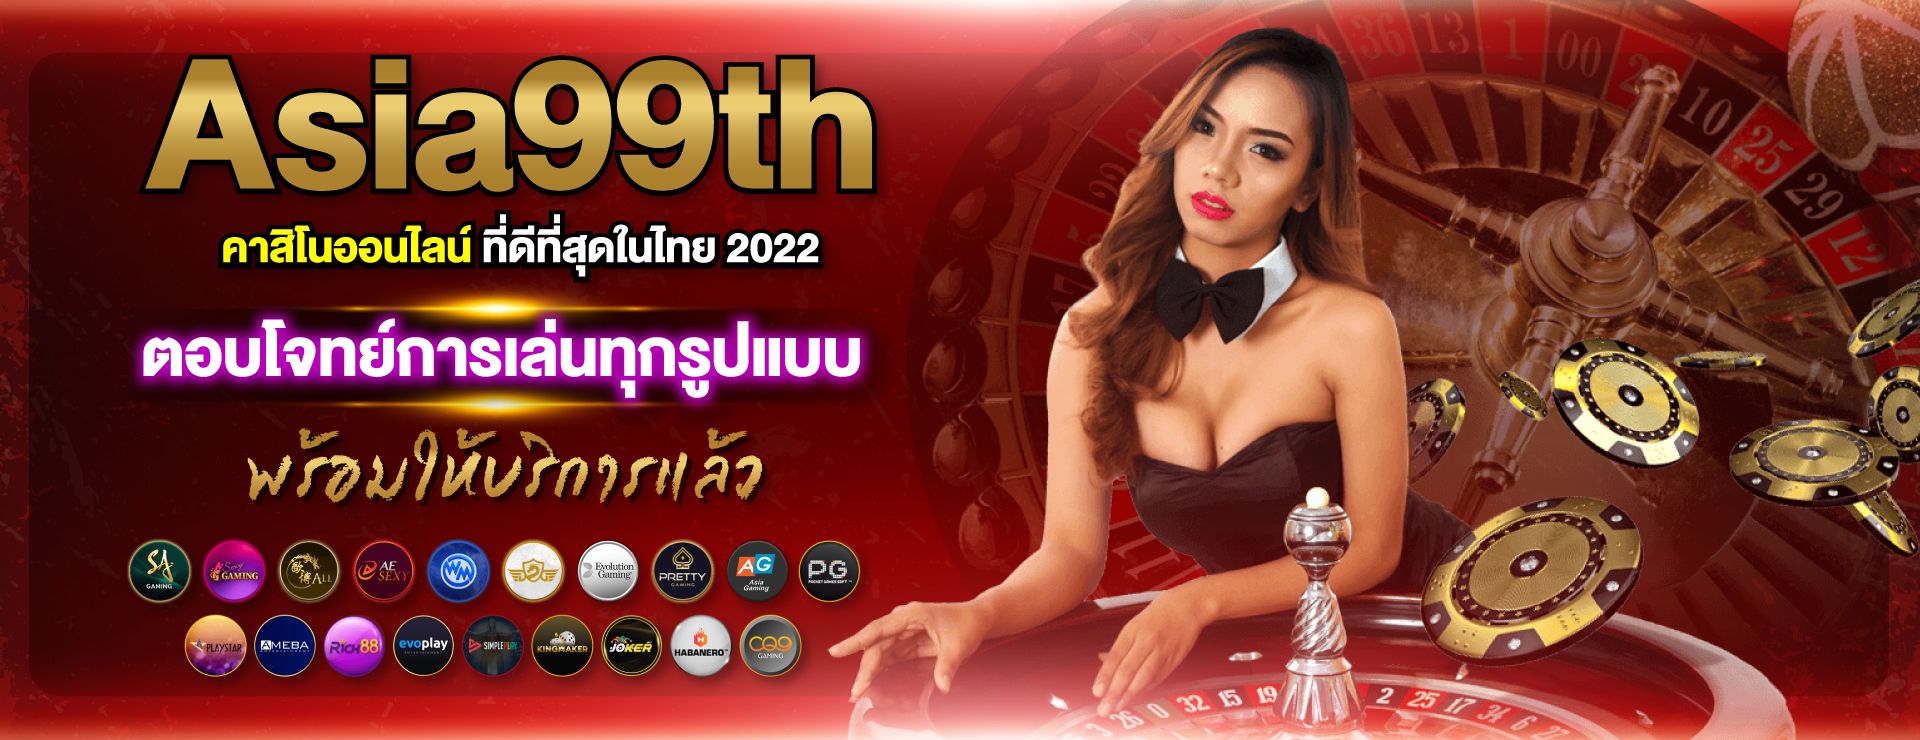 Asia99th-คาสิโนออนไลน์ที่ดีที่สุดในไทย-2022-ตอบโจทย์การเล่นทุกรูปแบบ-พร้อมให้บริการแล้ว (1)